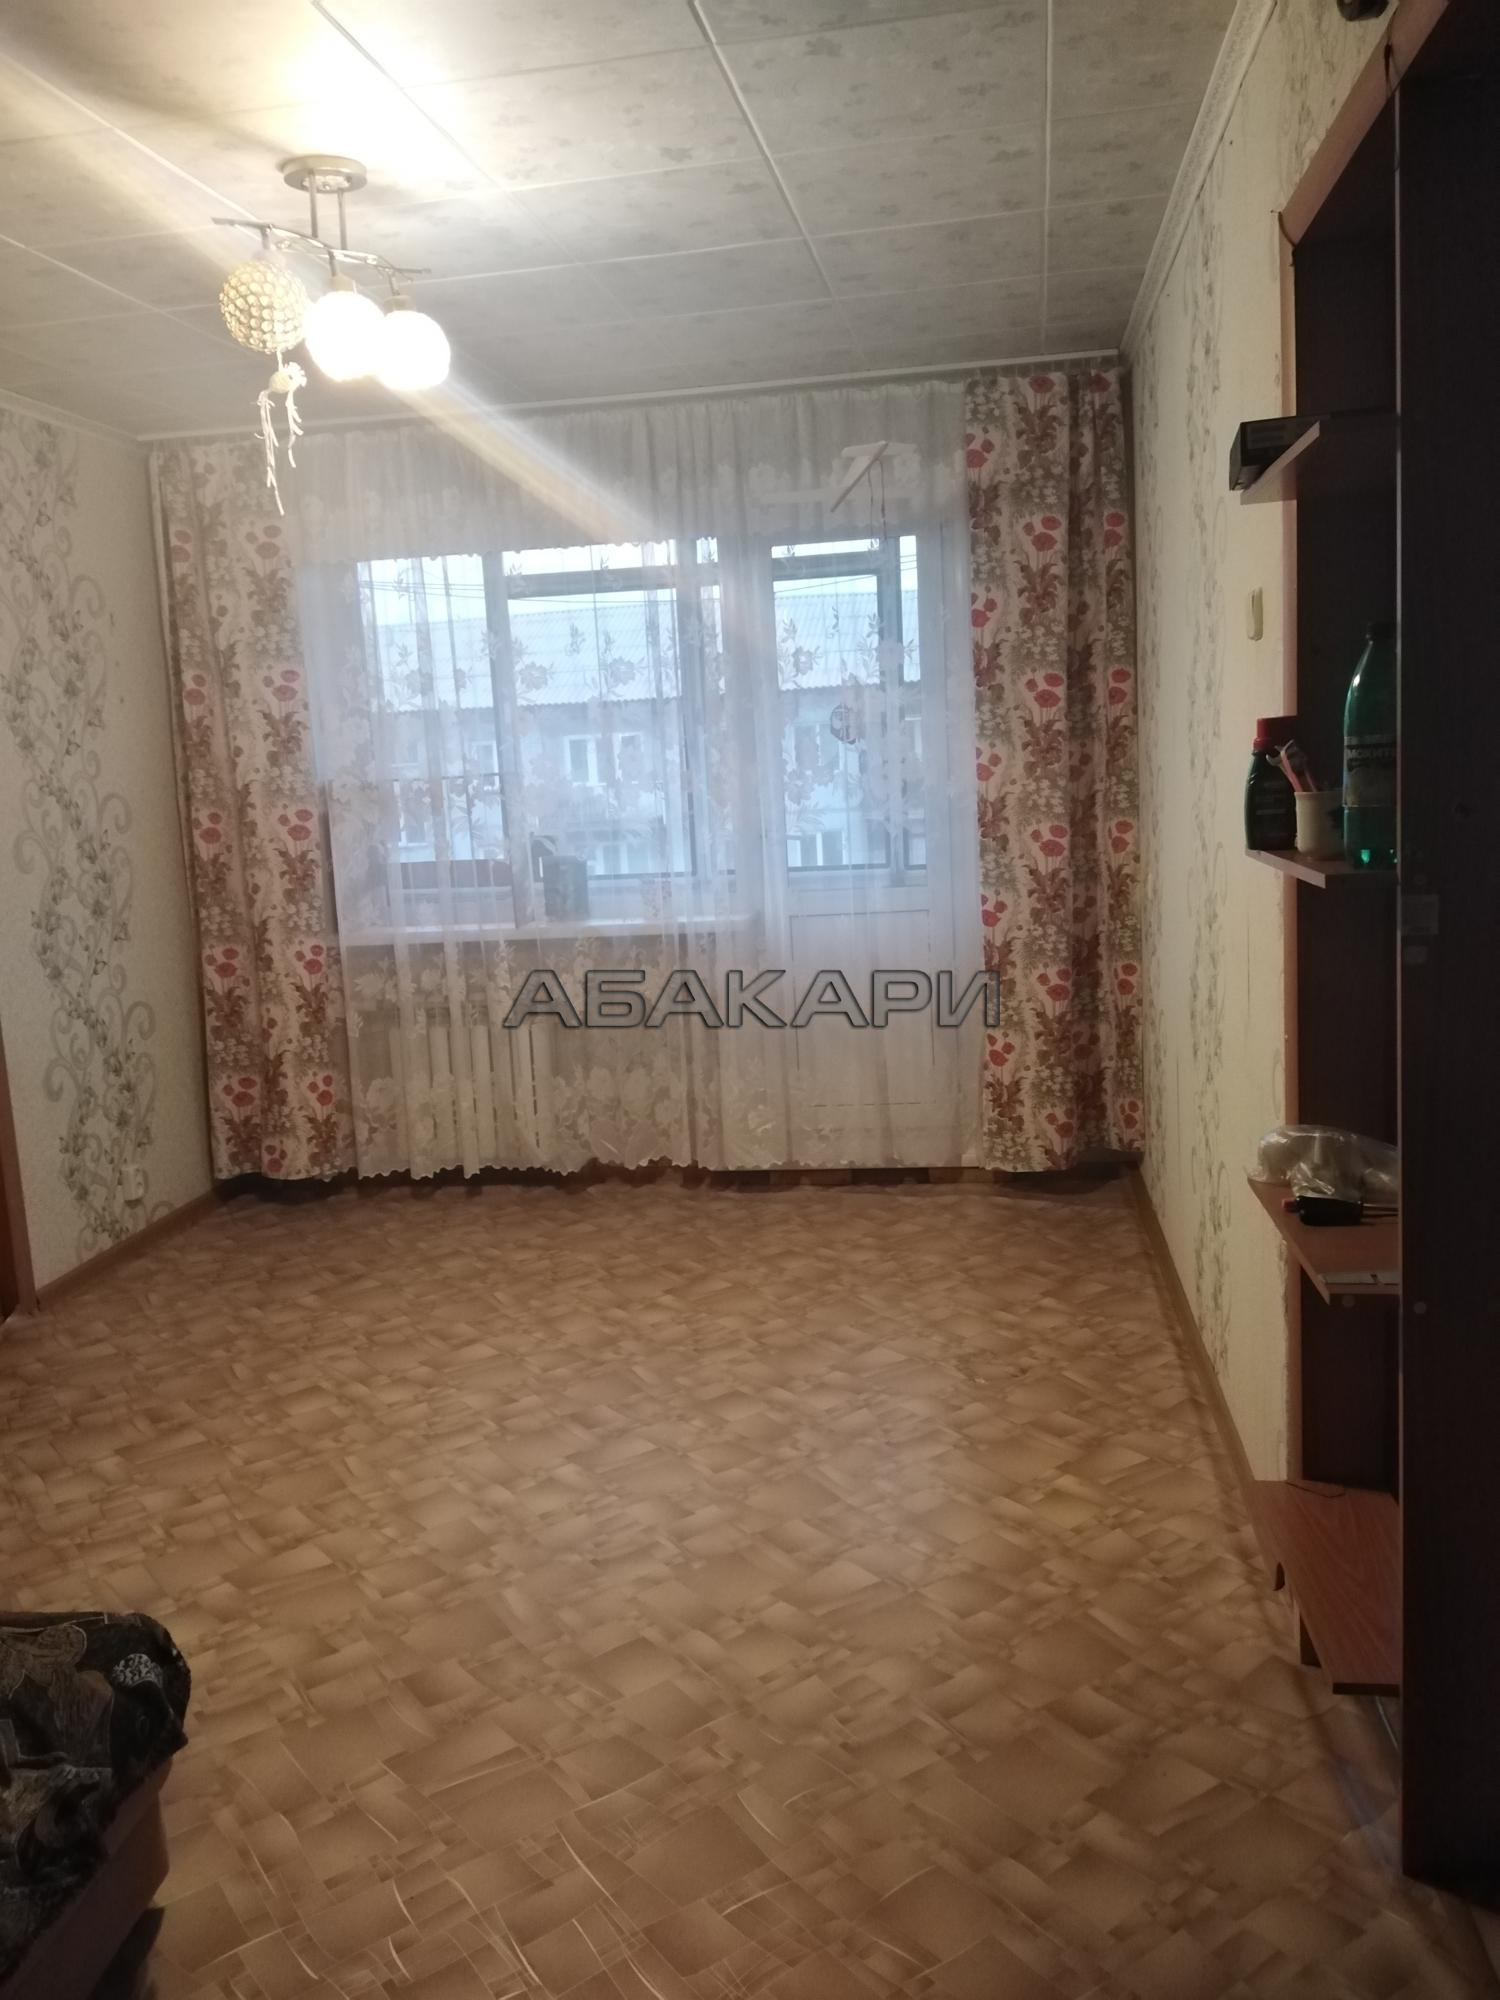 2-комнатная проспект Металлургов, 31  за 25000 руб/мес фото 6